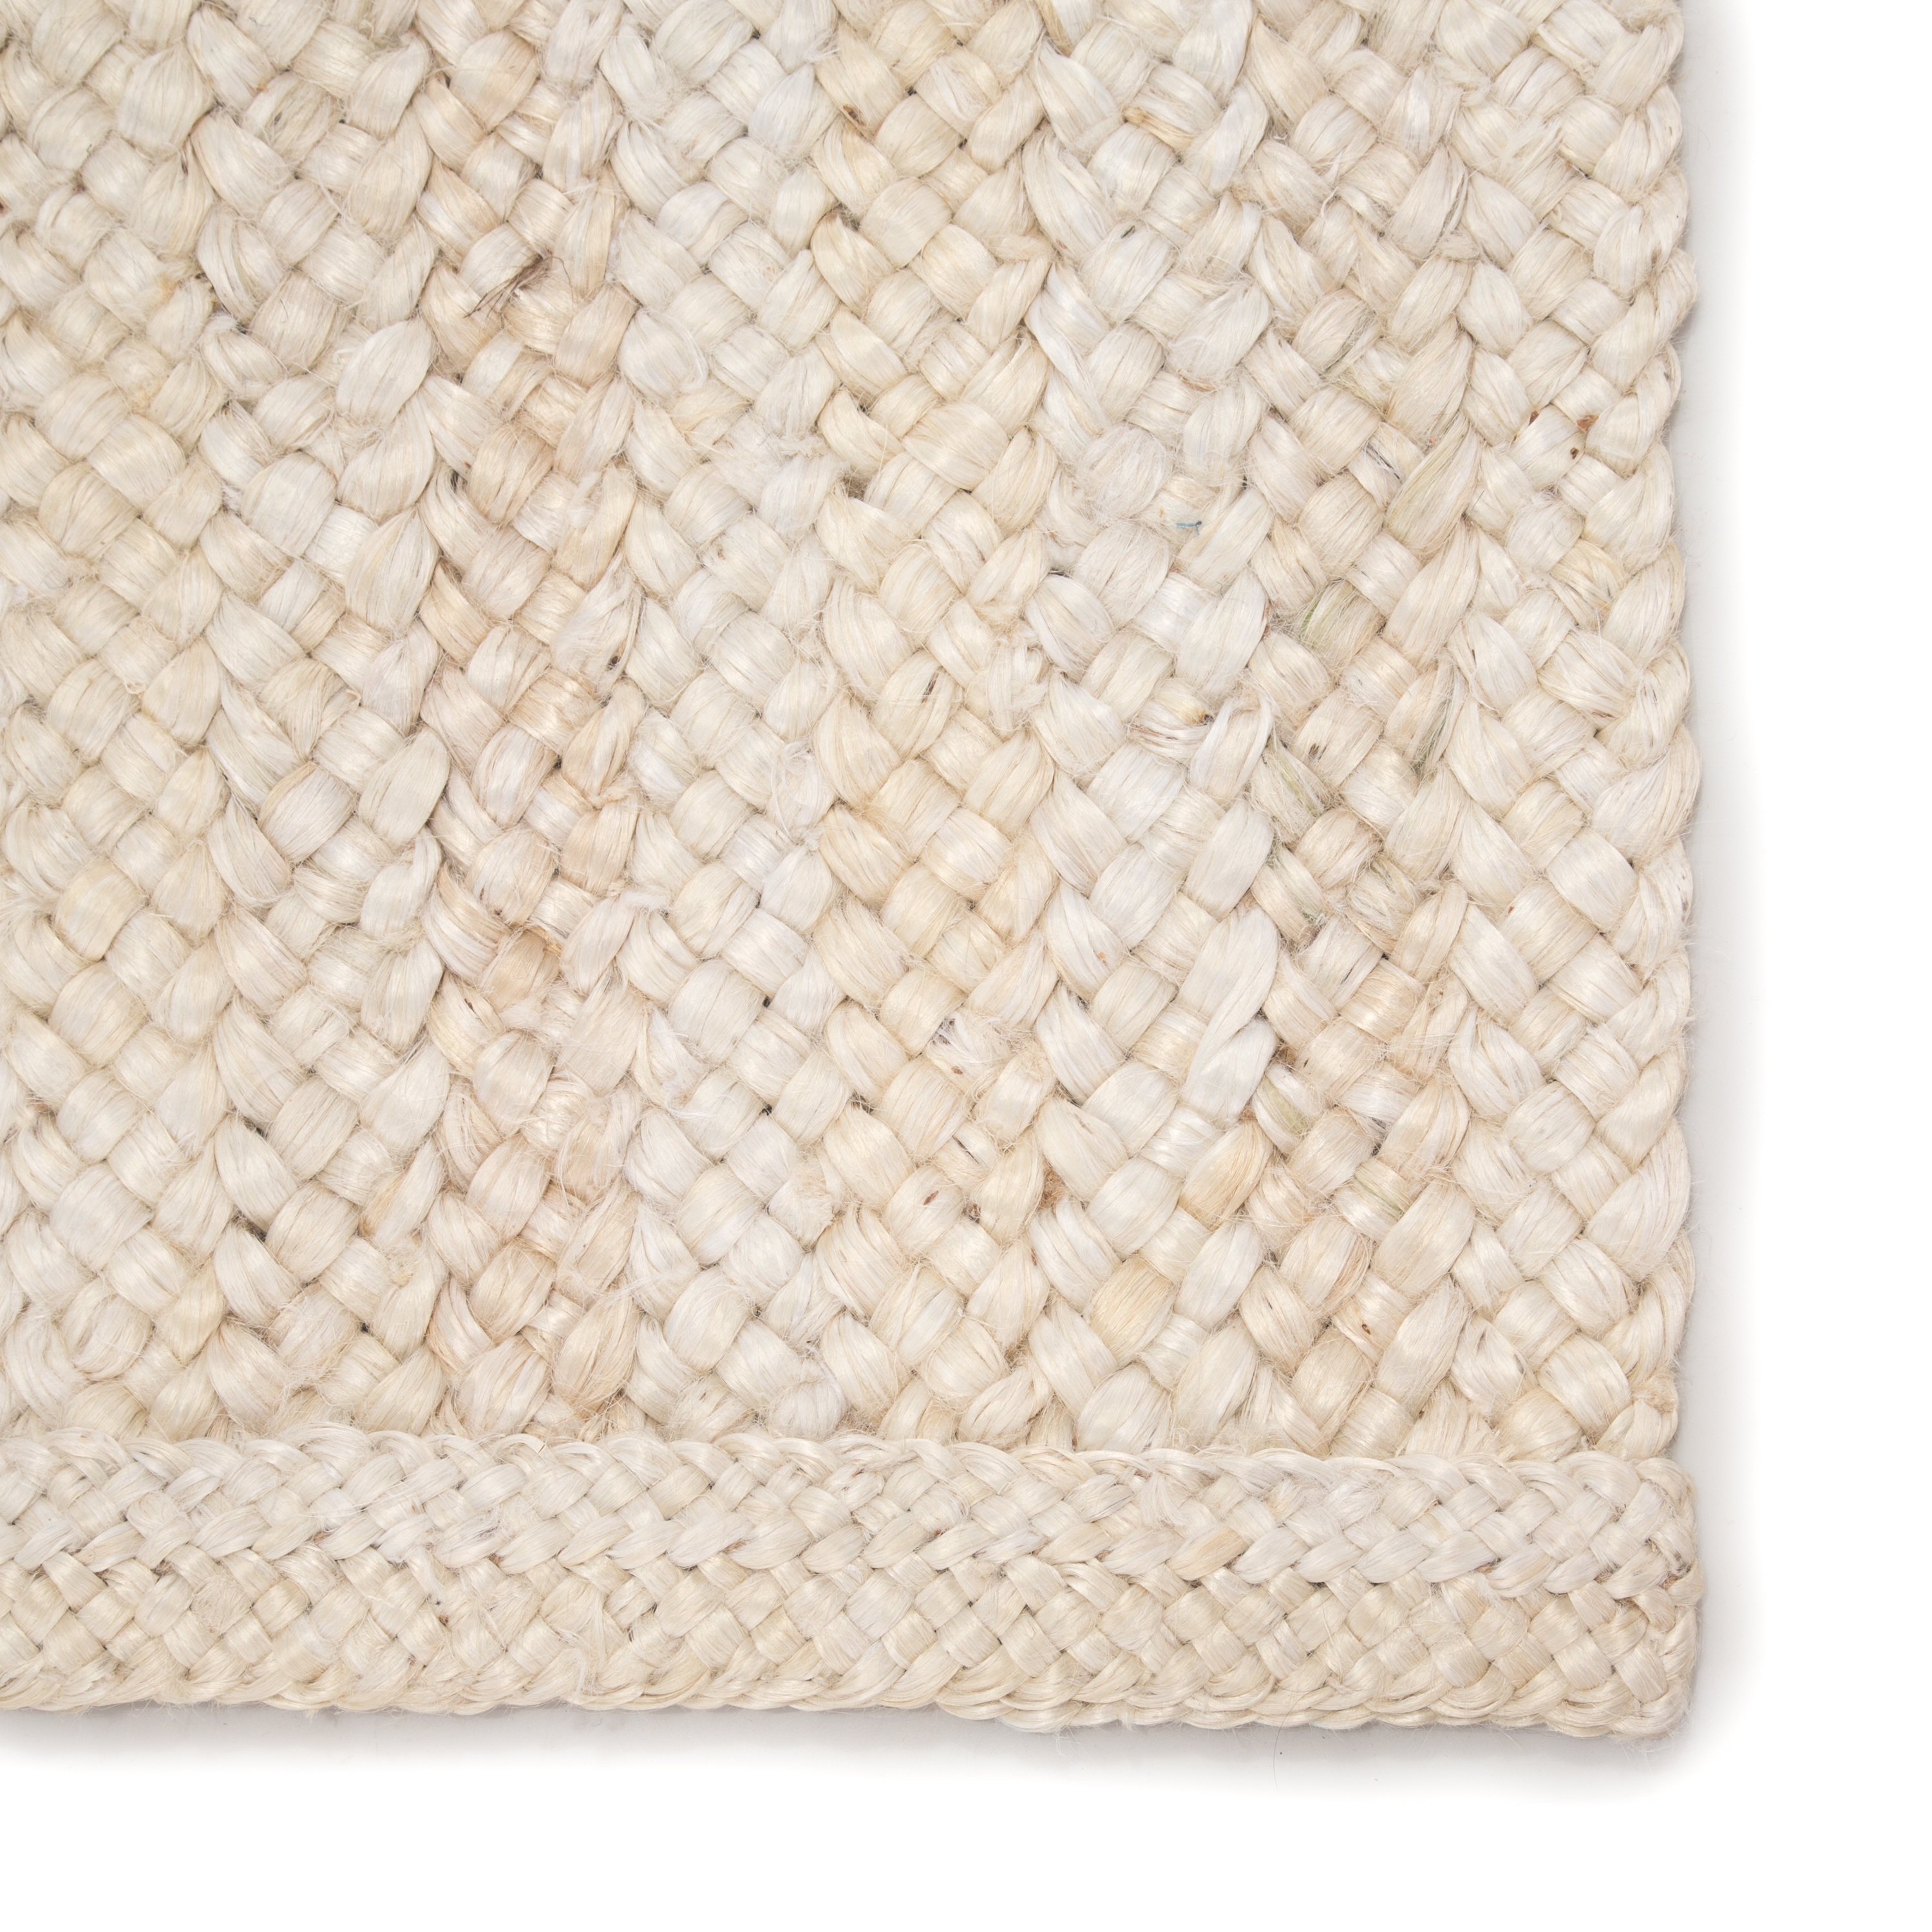 Anichini Natural Solid Ivory/ Beige Area Rug (4'X6') - Image 3